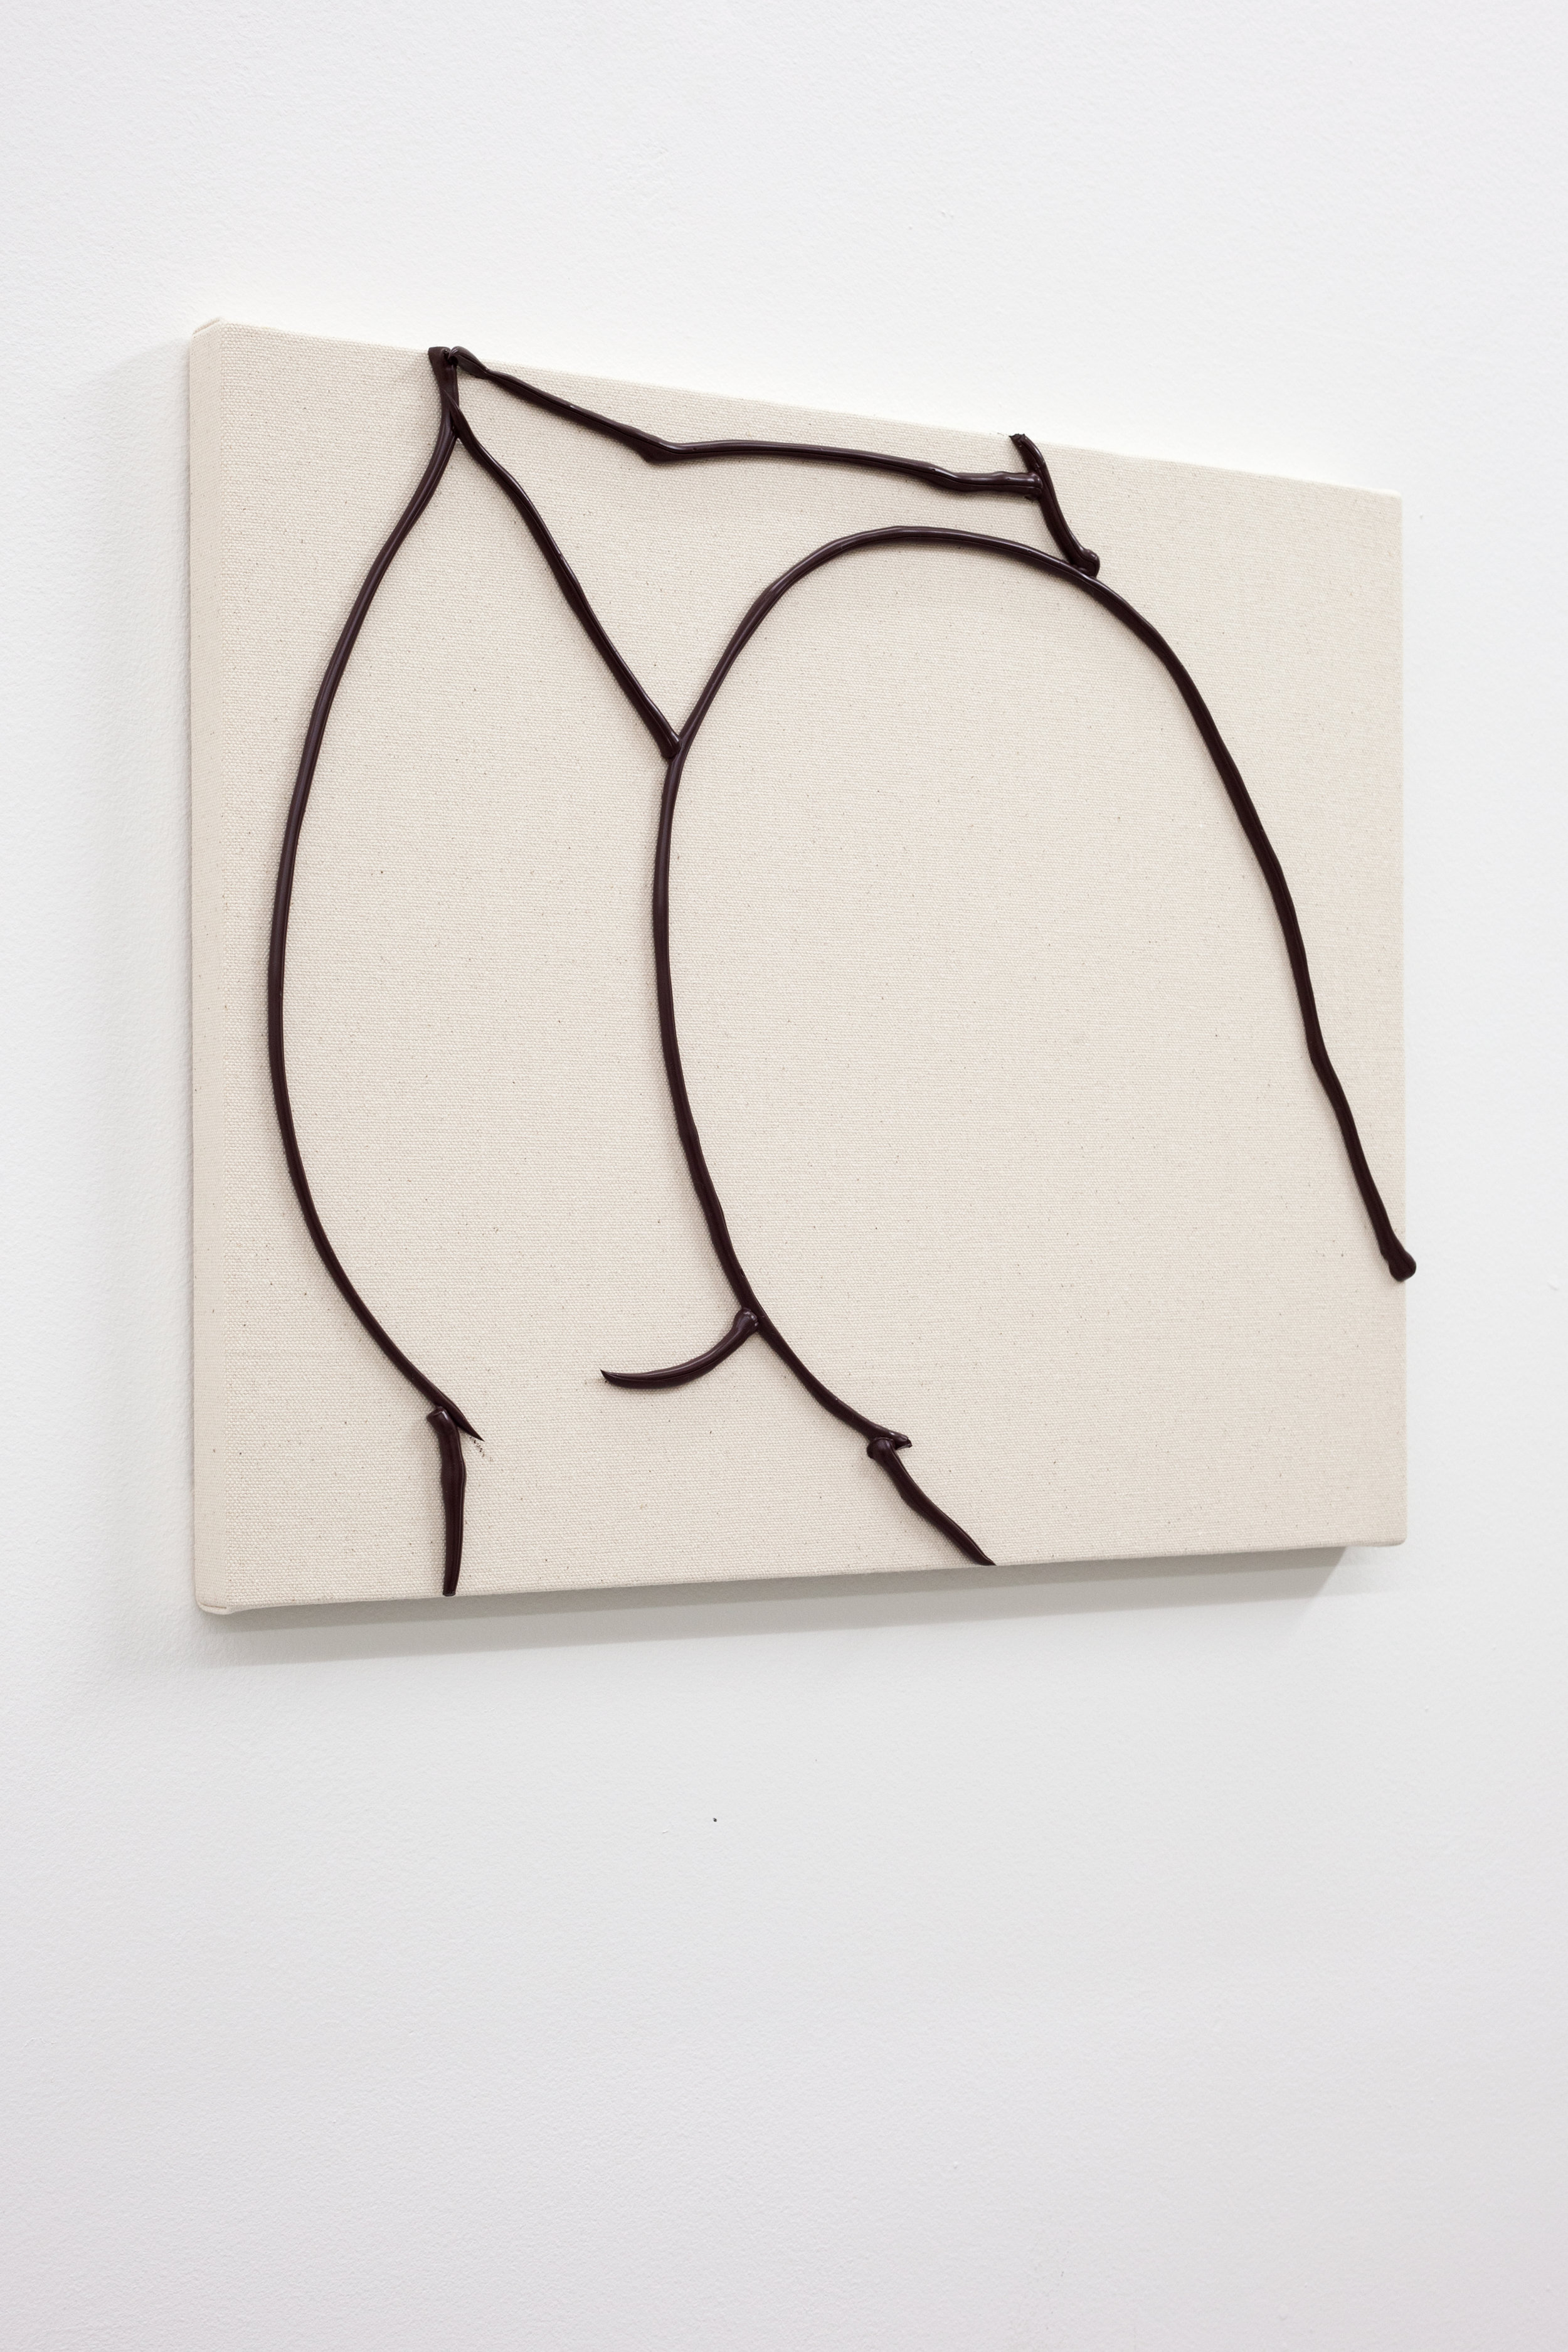  Omari Douglin,  Untitled (Butt Painting),  2019, Caulk on Raw Canvas, 13x16in 